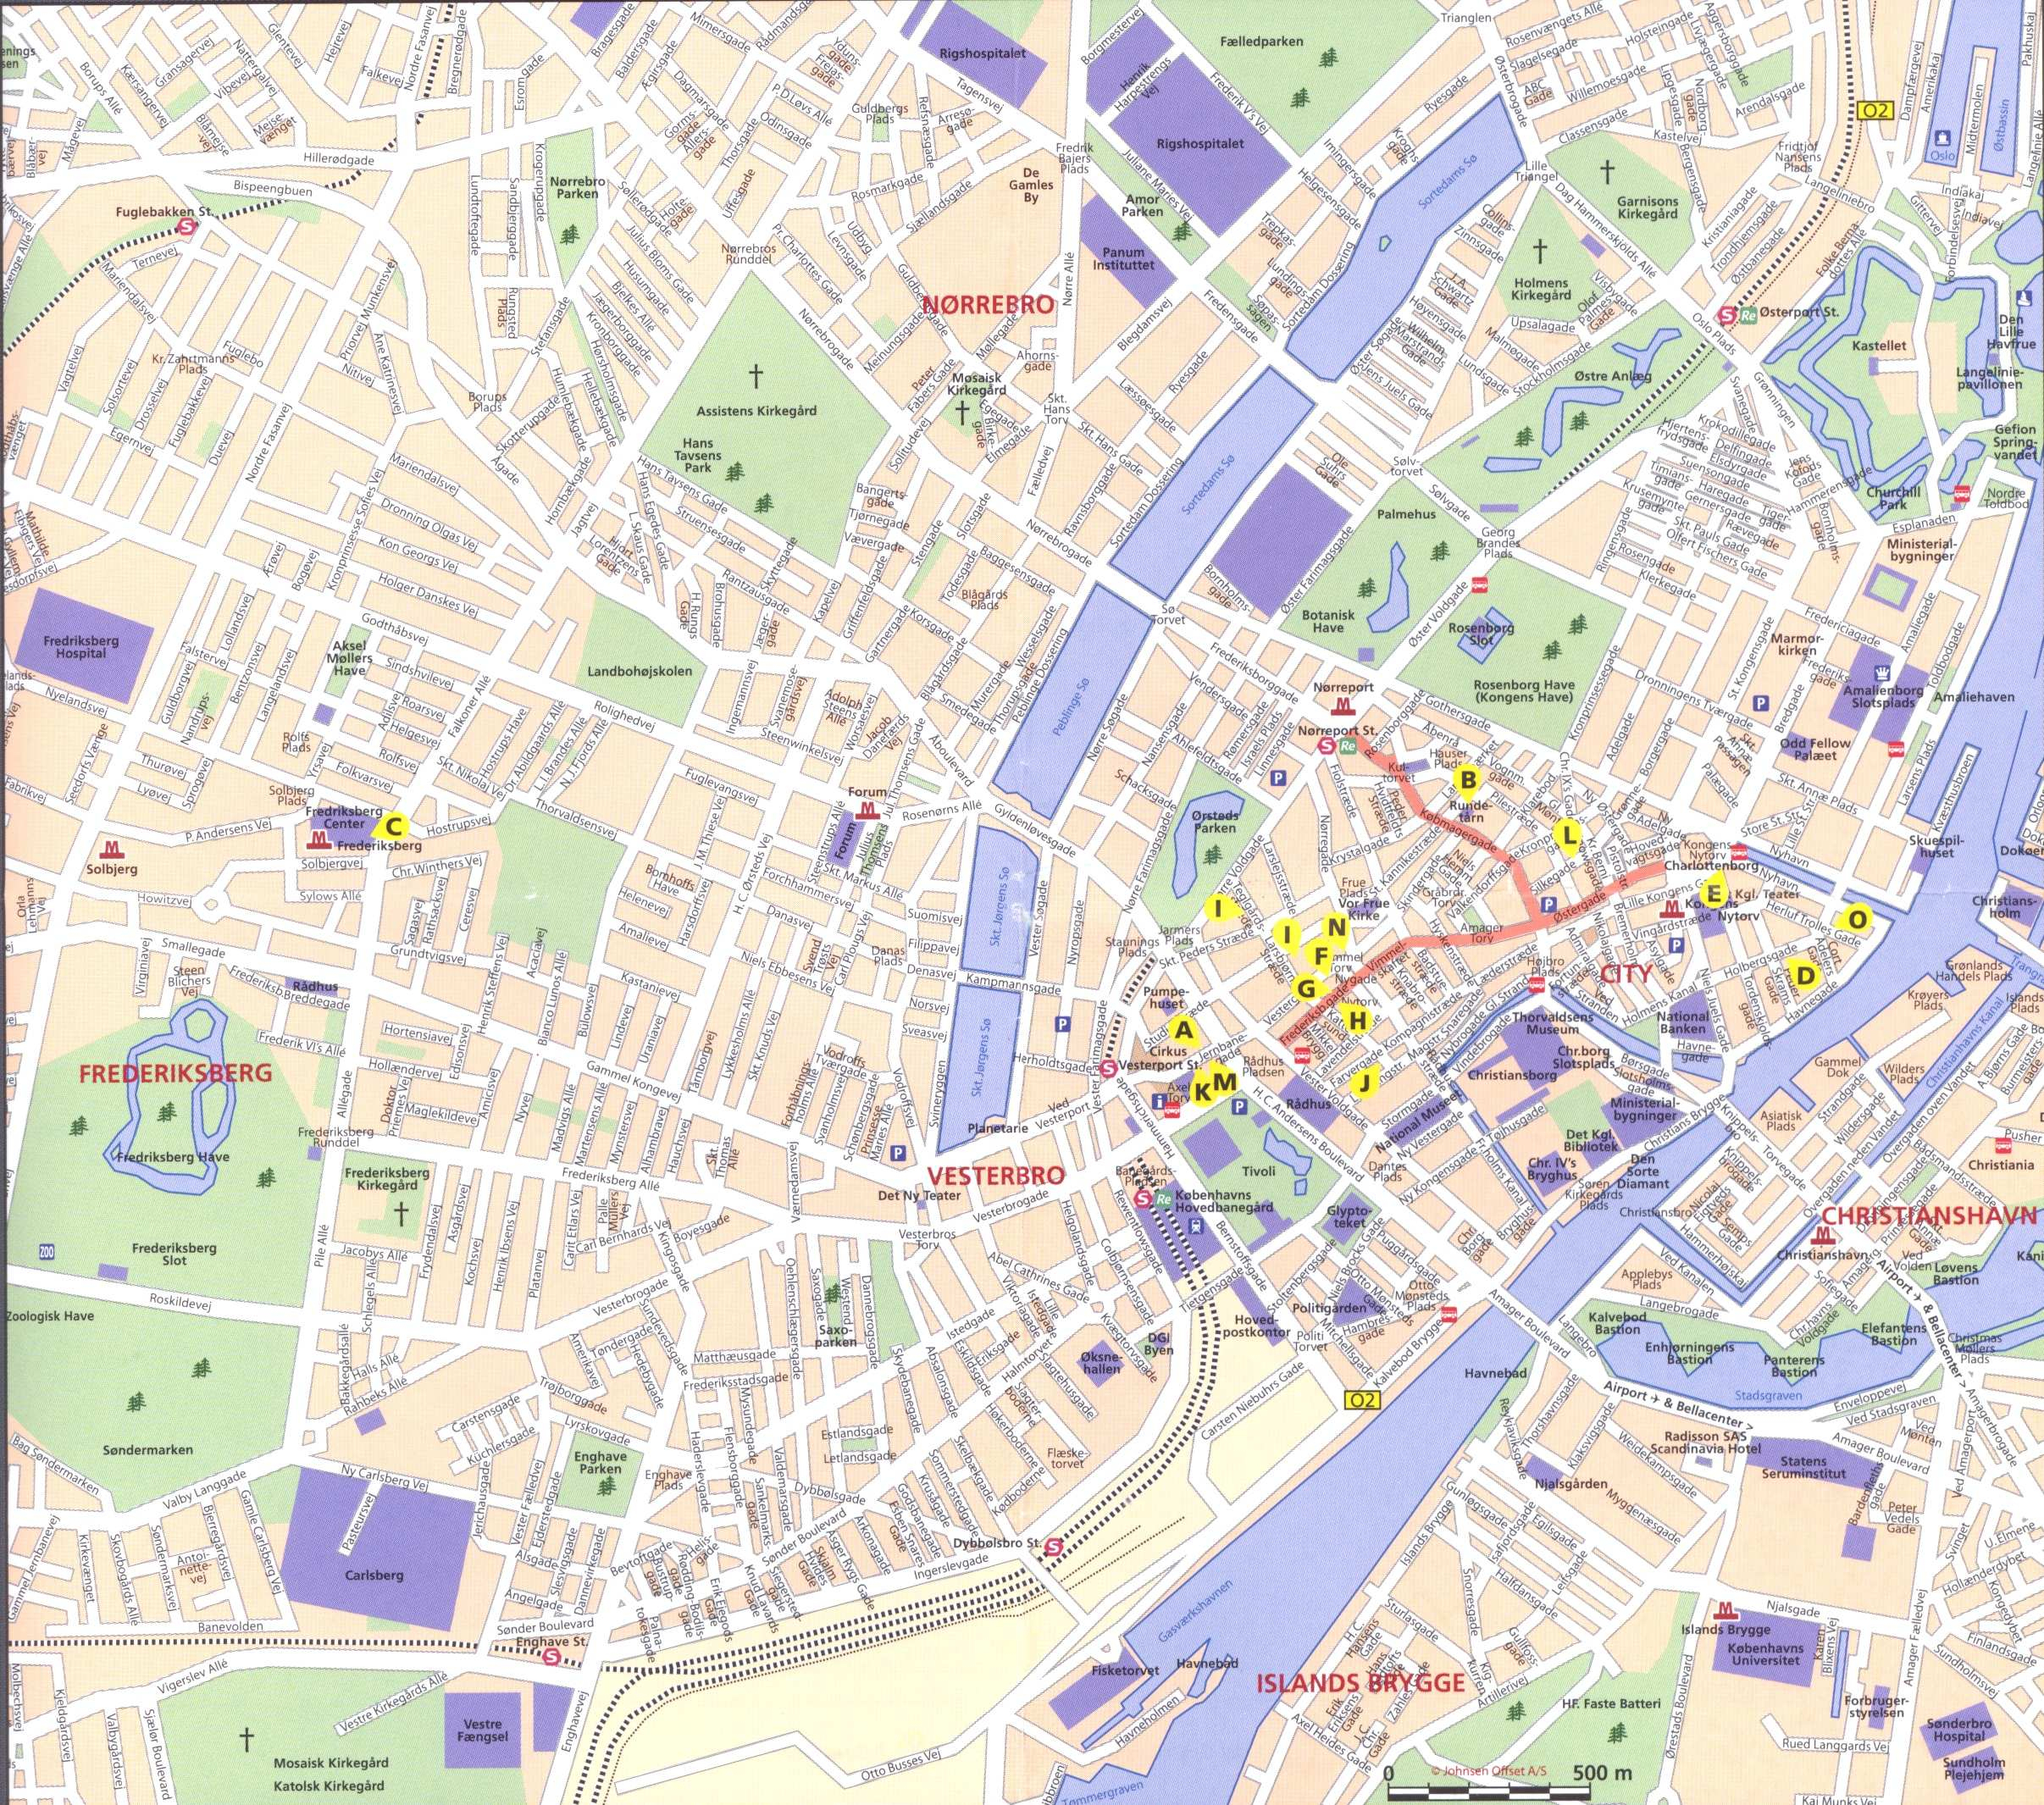 Large Copenhagen Maps For Free Download And Print | High-Resolution - Copenhagen Tourist Map Printable